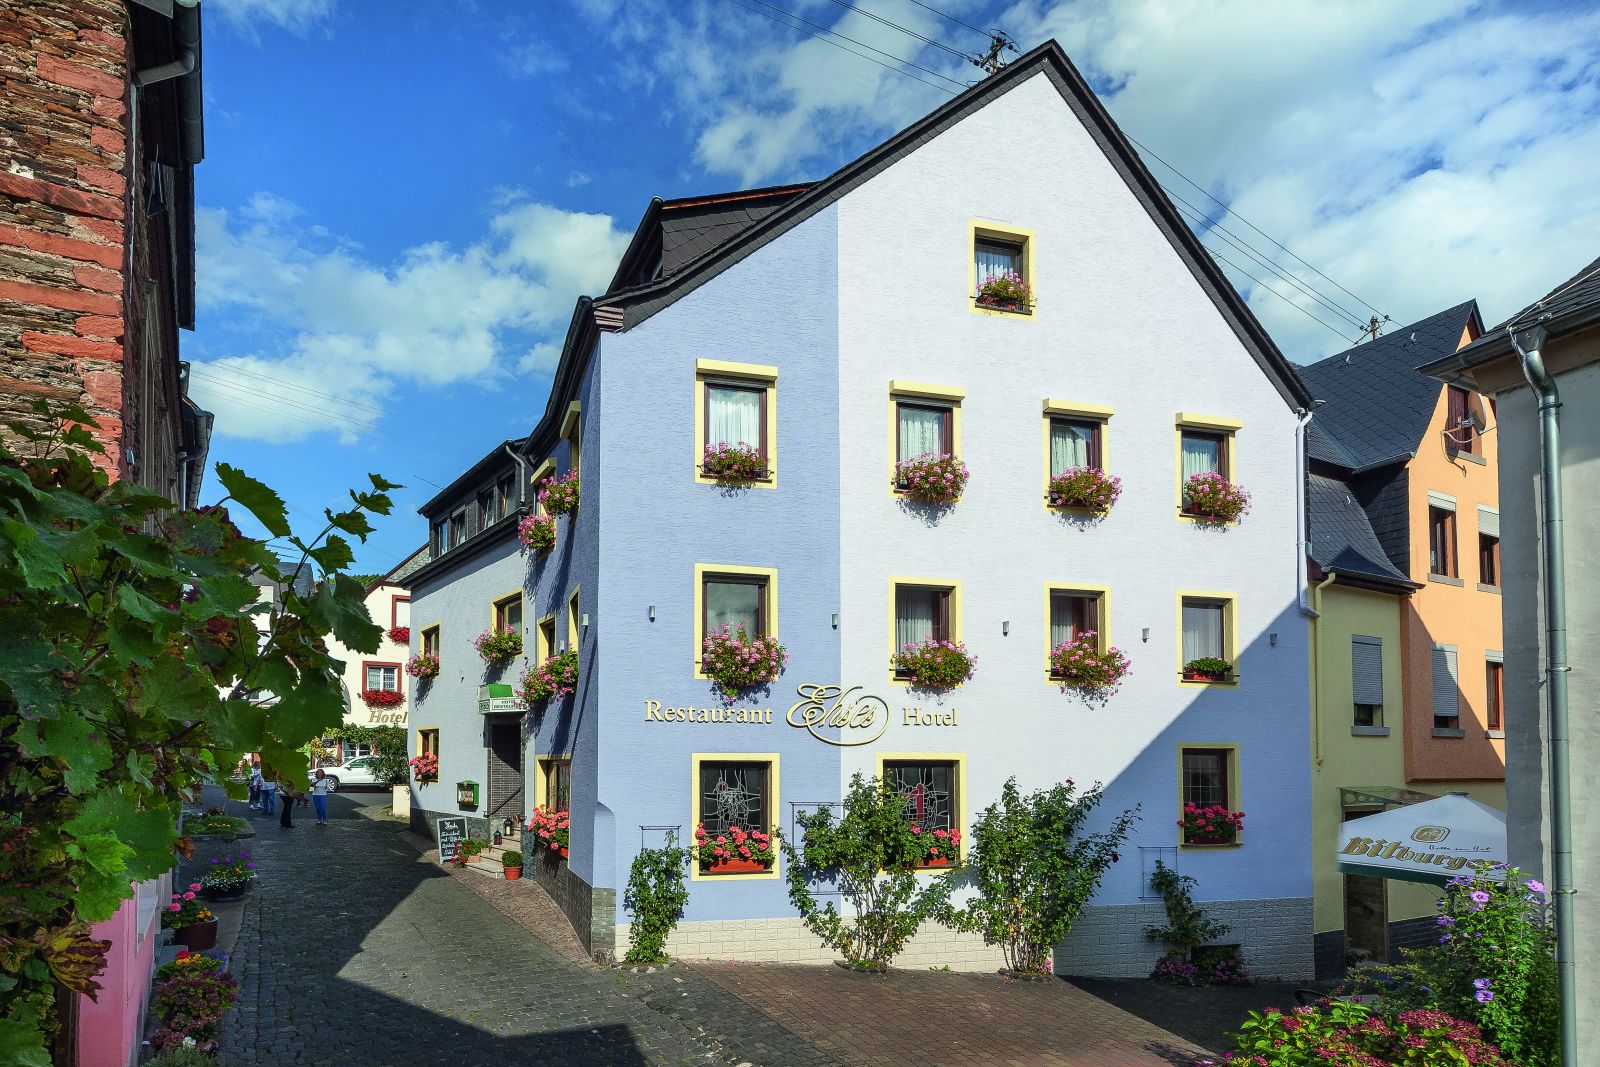 2014-09-18-Scholer--Hotel-Restaurant-Ehses-2718-Bearbeitet (1).jpg